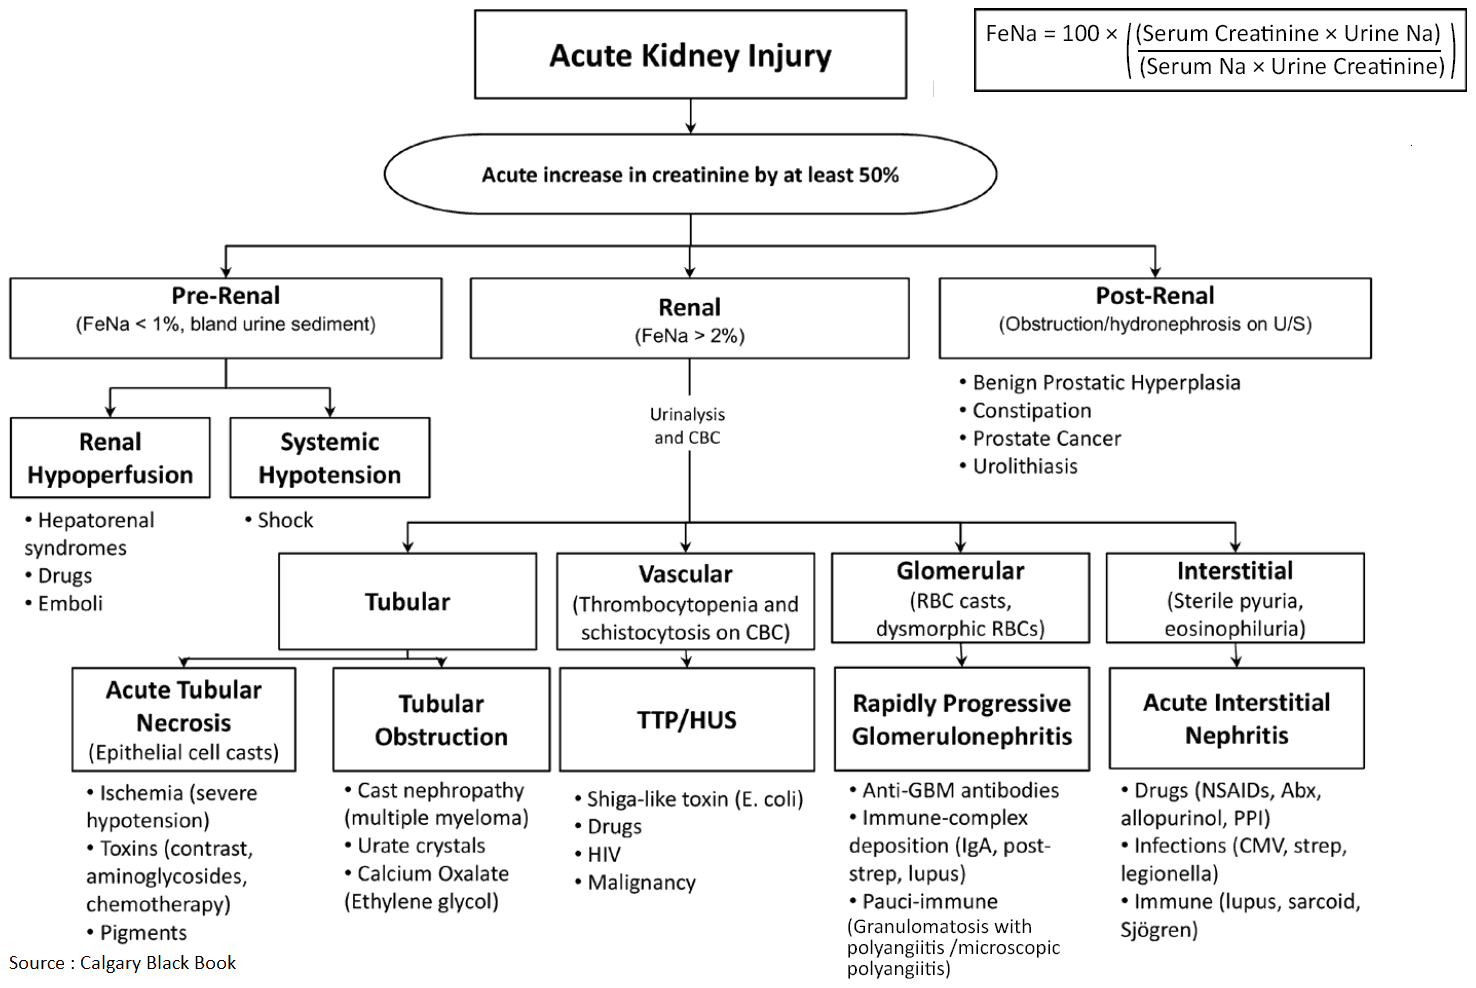 Acute Kidney Injury - Causes